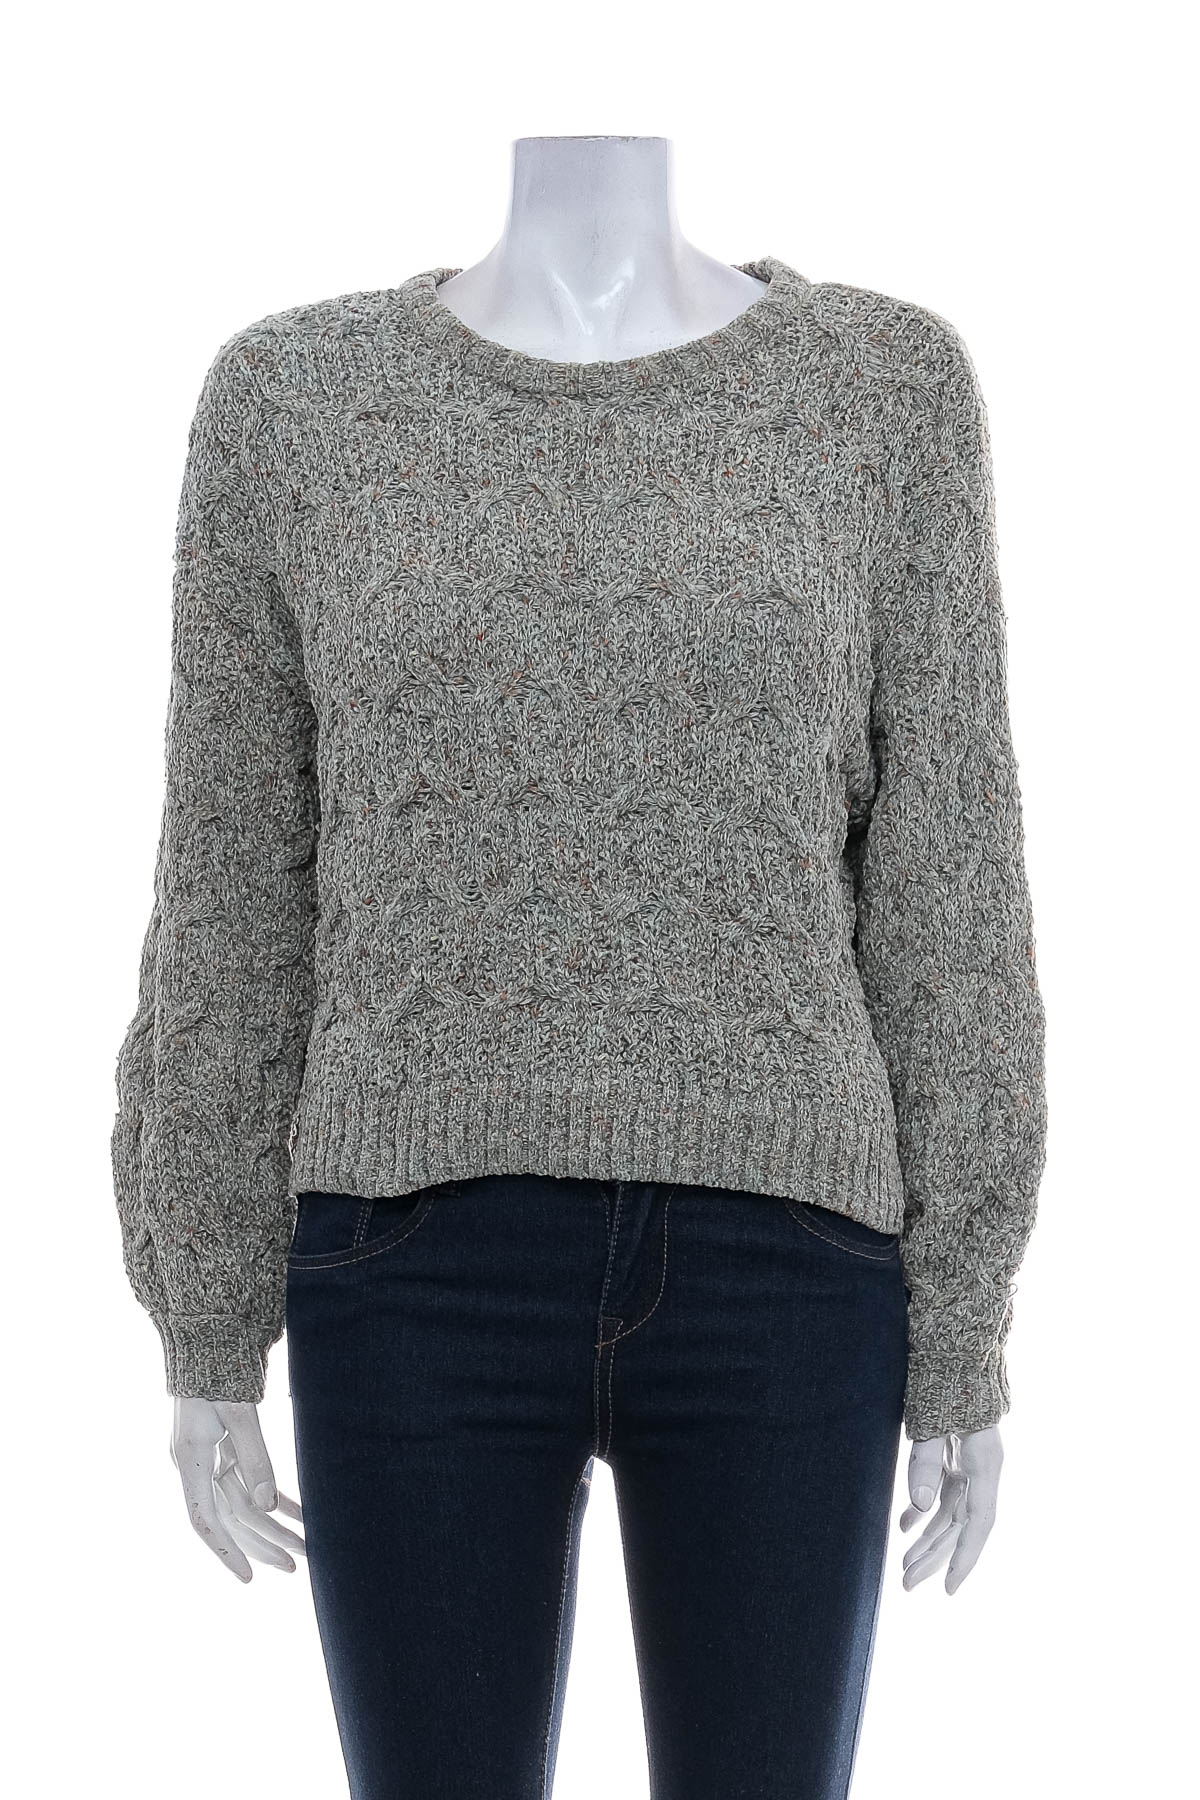 Women's sweater - Jessica Simpson - 0